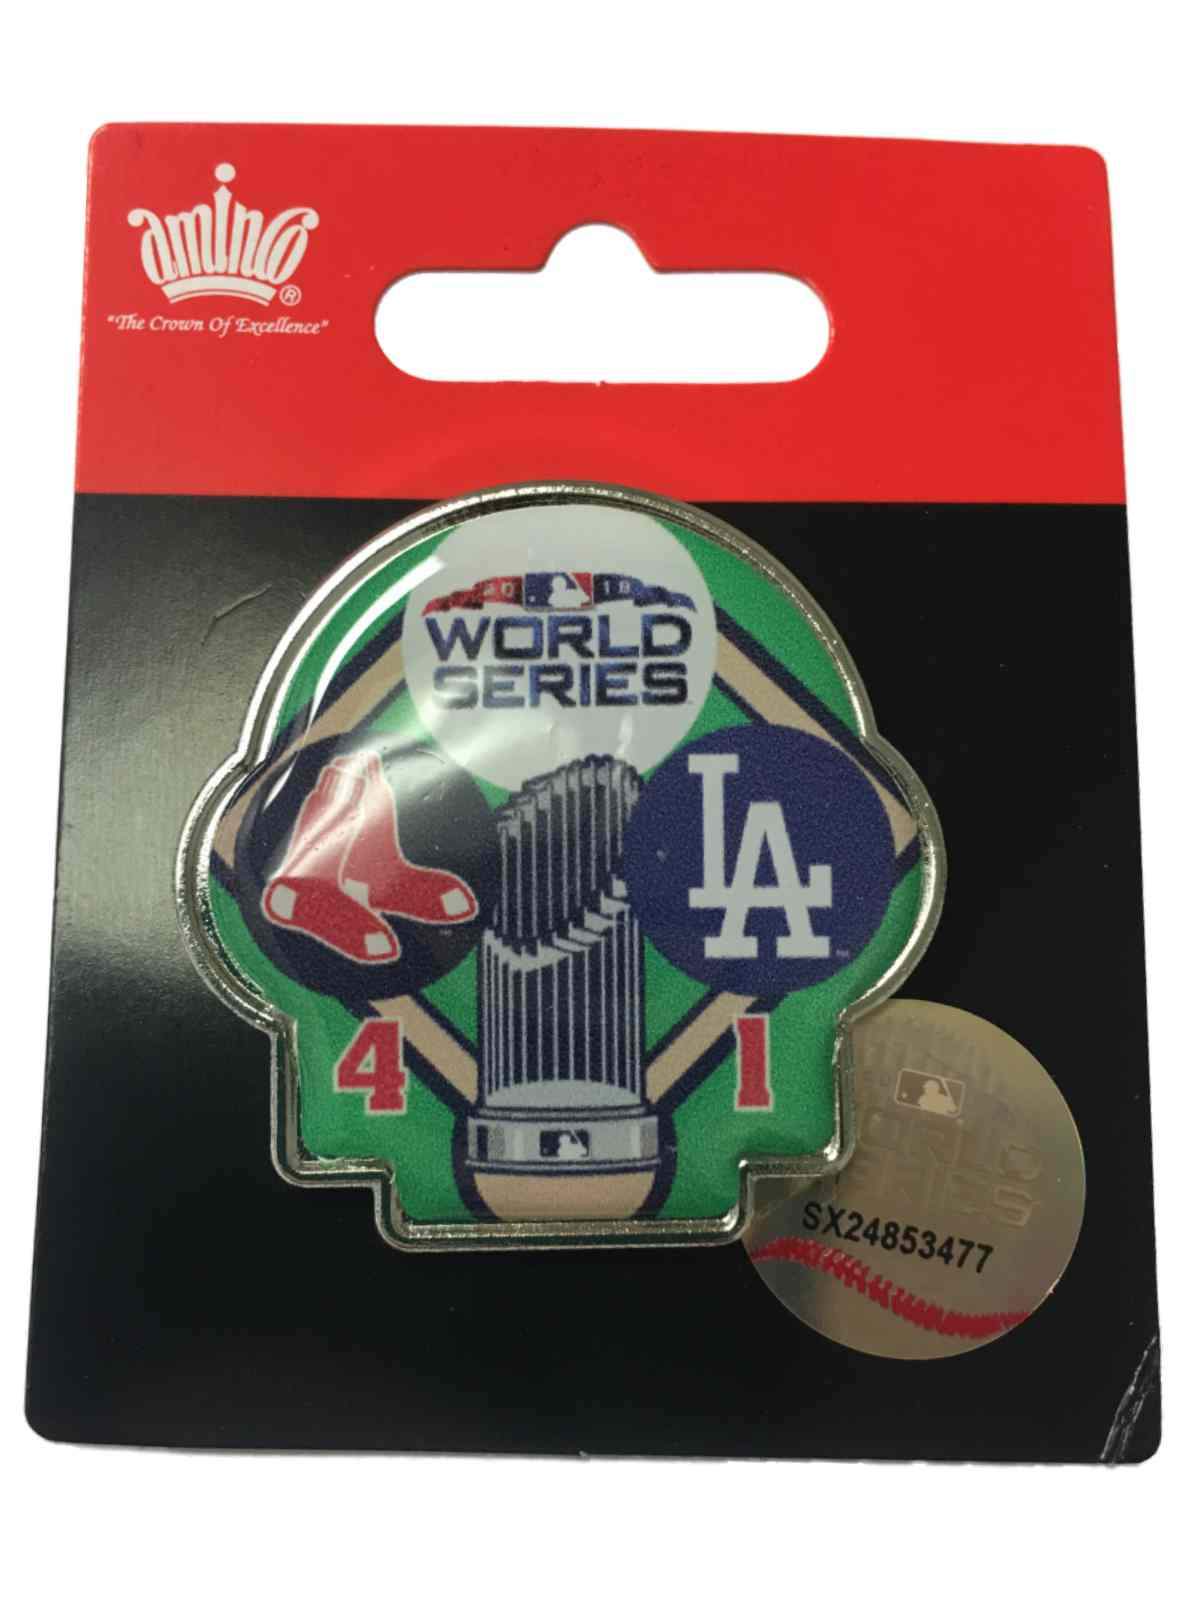 2021 MLB World Series Champions Logo Lapel Pin Atlanta Braves